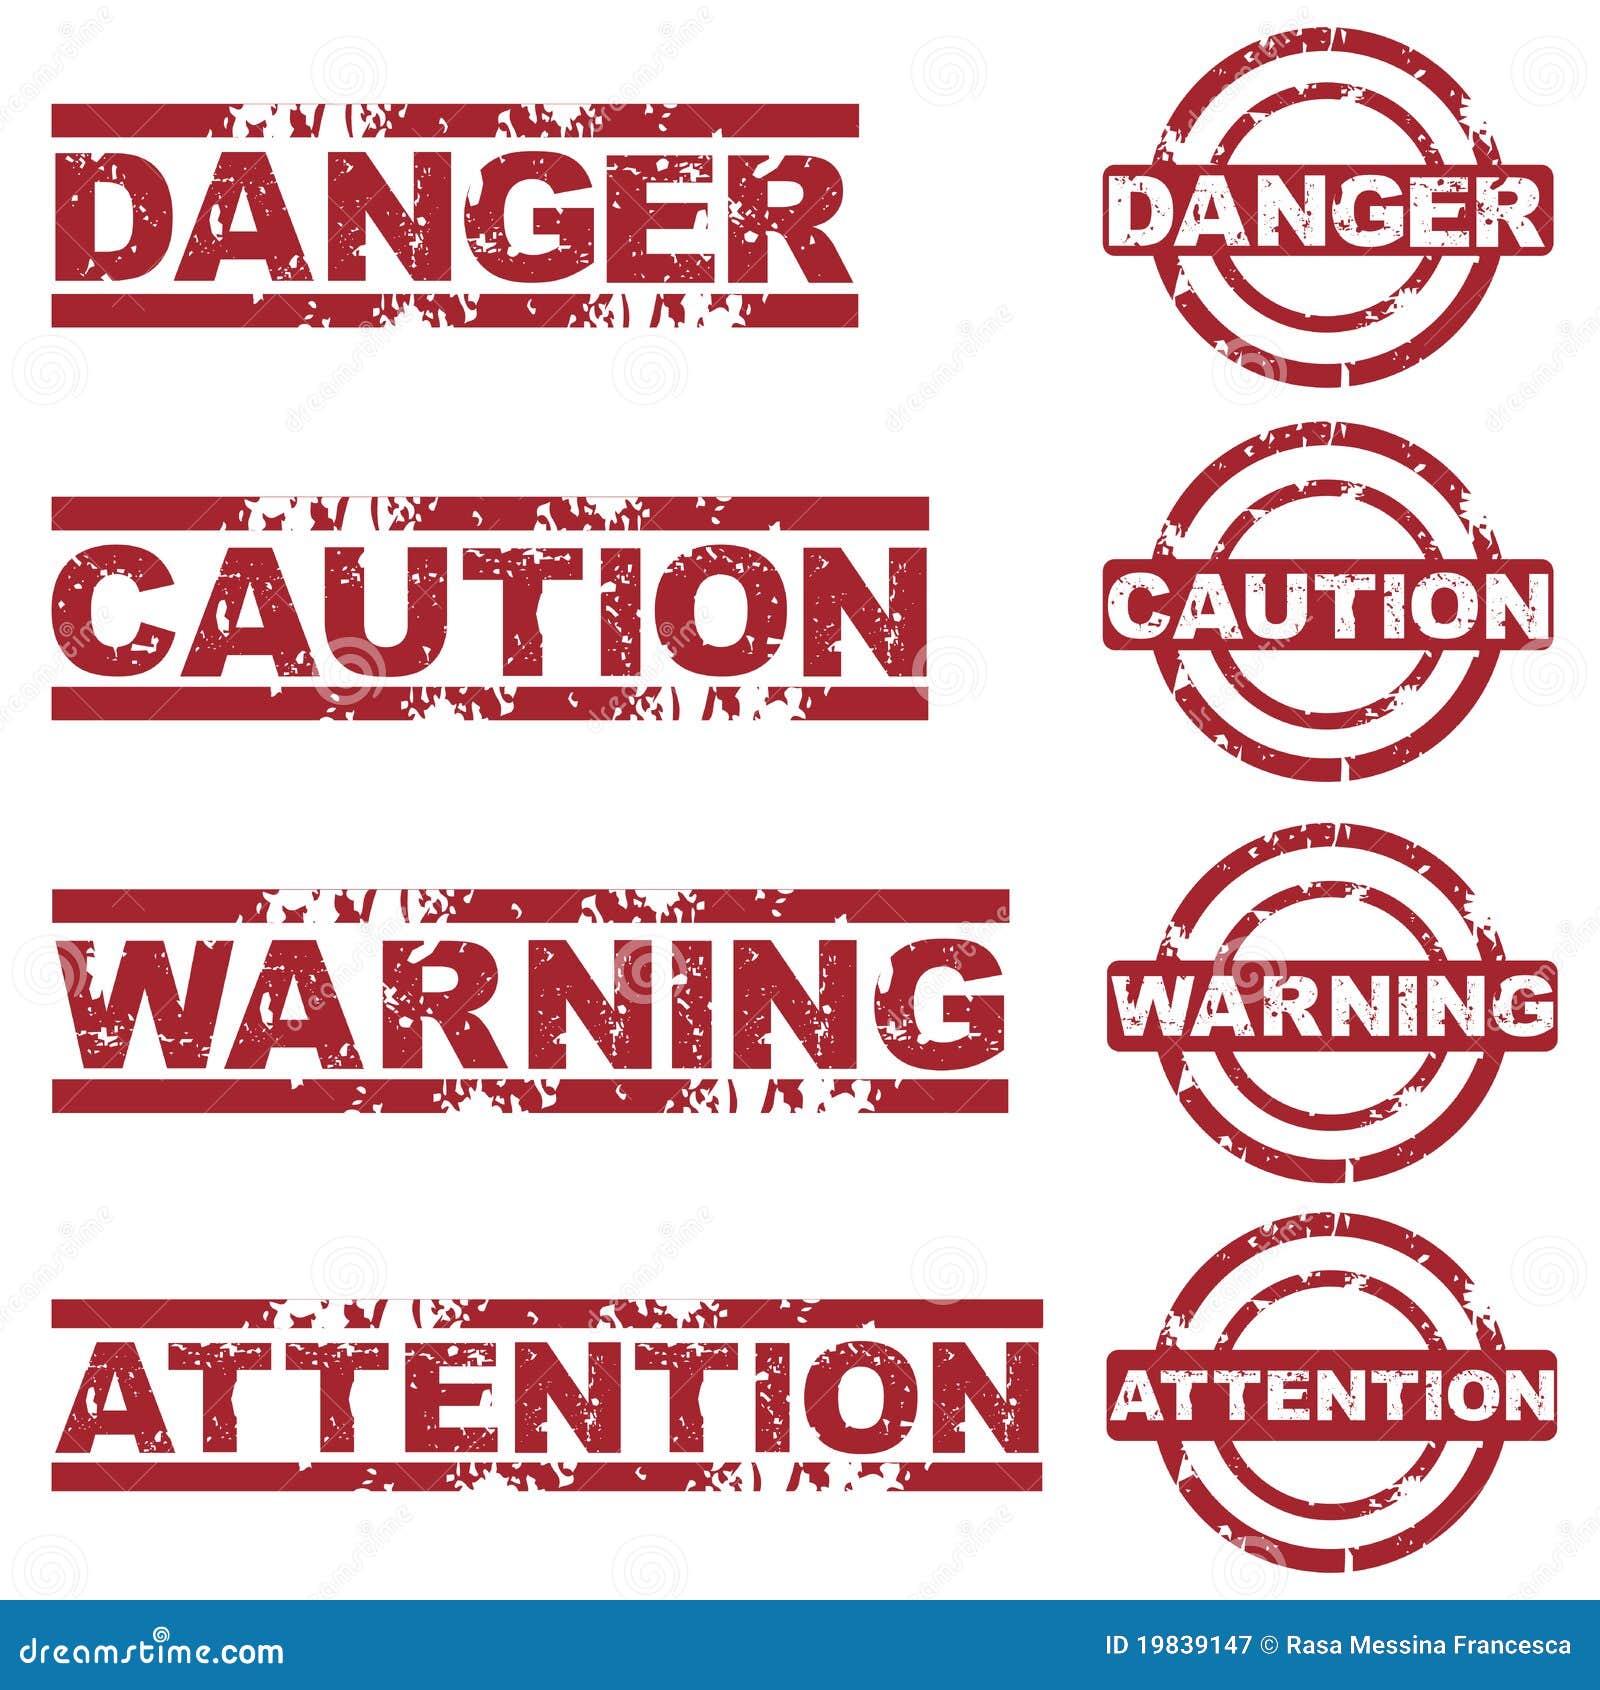 Danger stamps stock vector. Illustration of advise, icon ...
 Danger Stamp